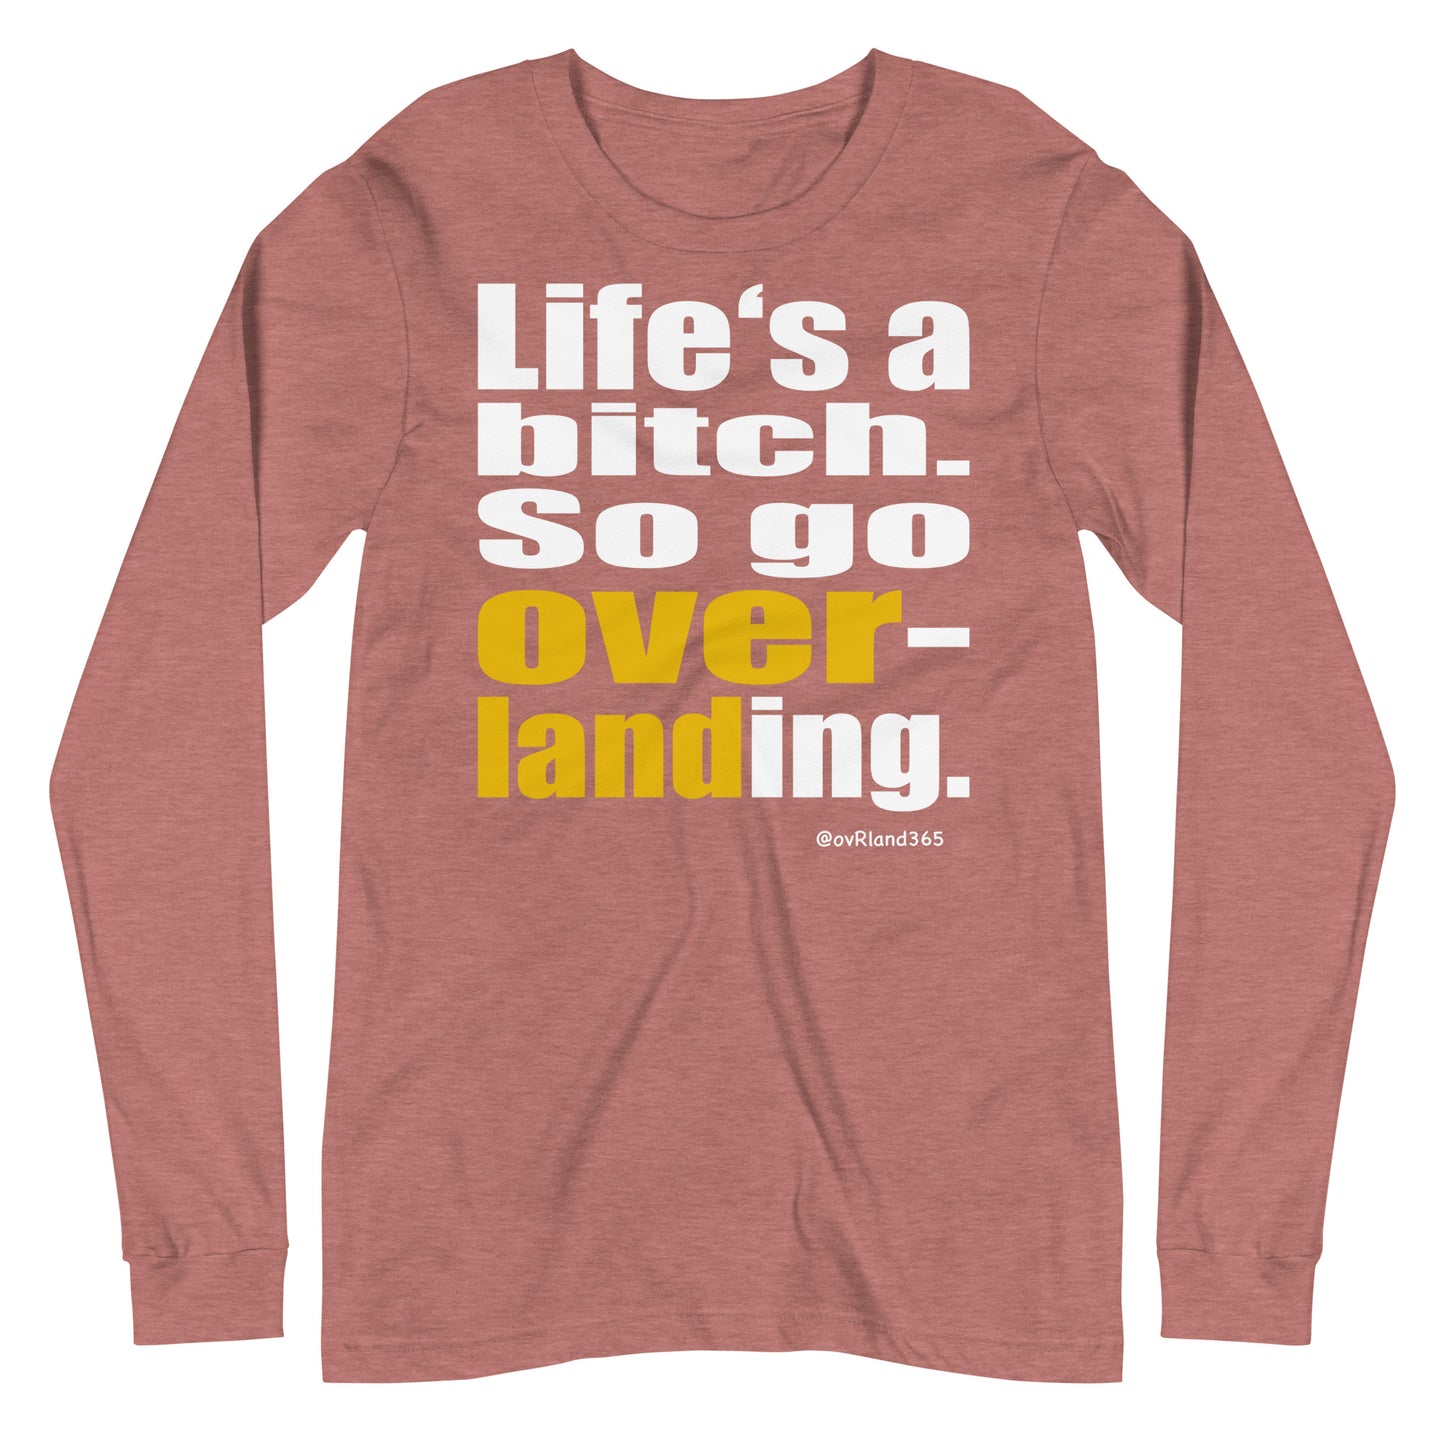 "Life's a bitch. So go overlanding." Pink long-sleeve. overland365.com